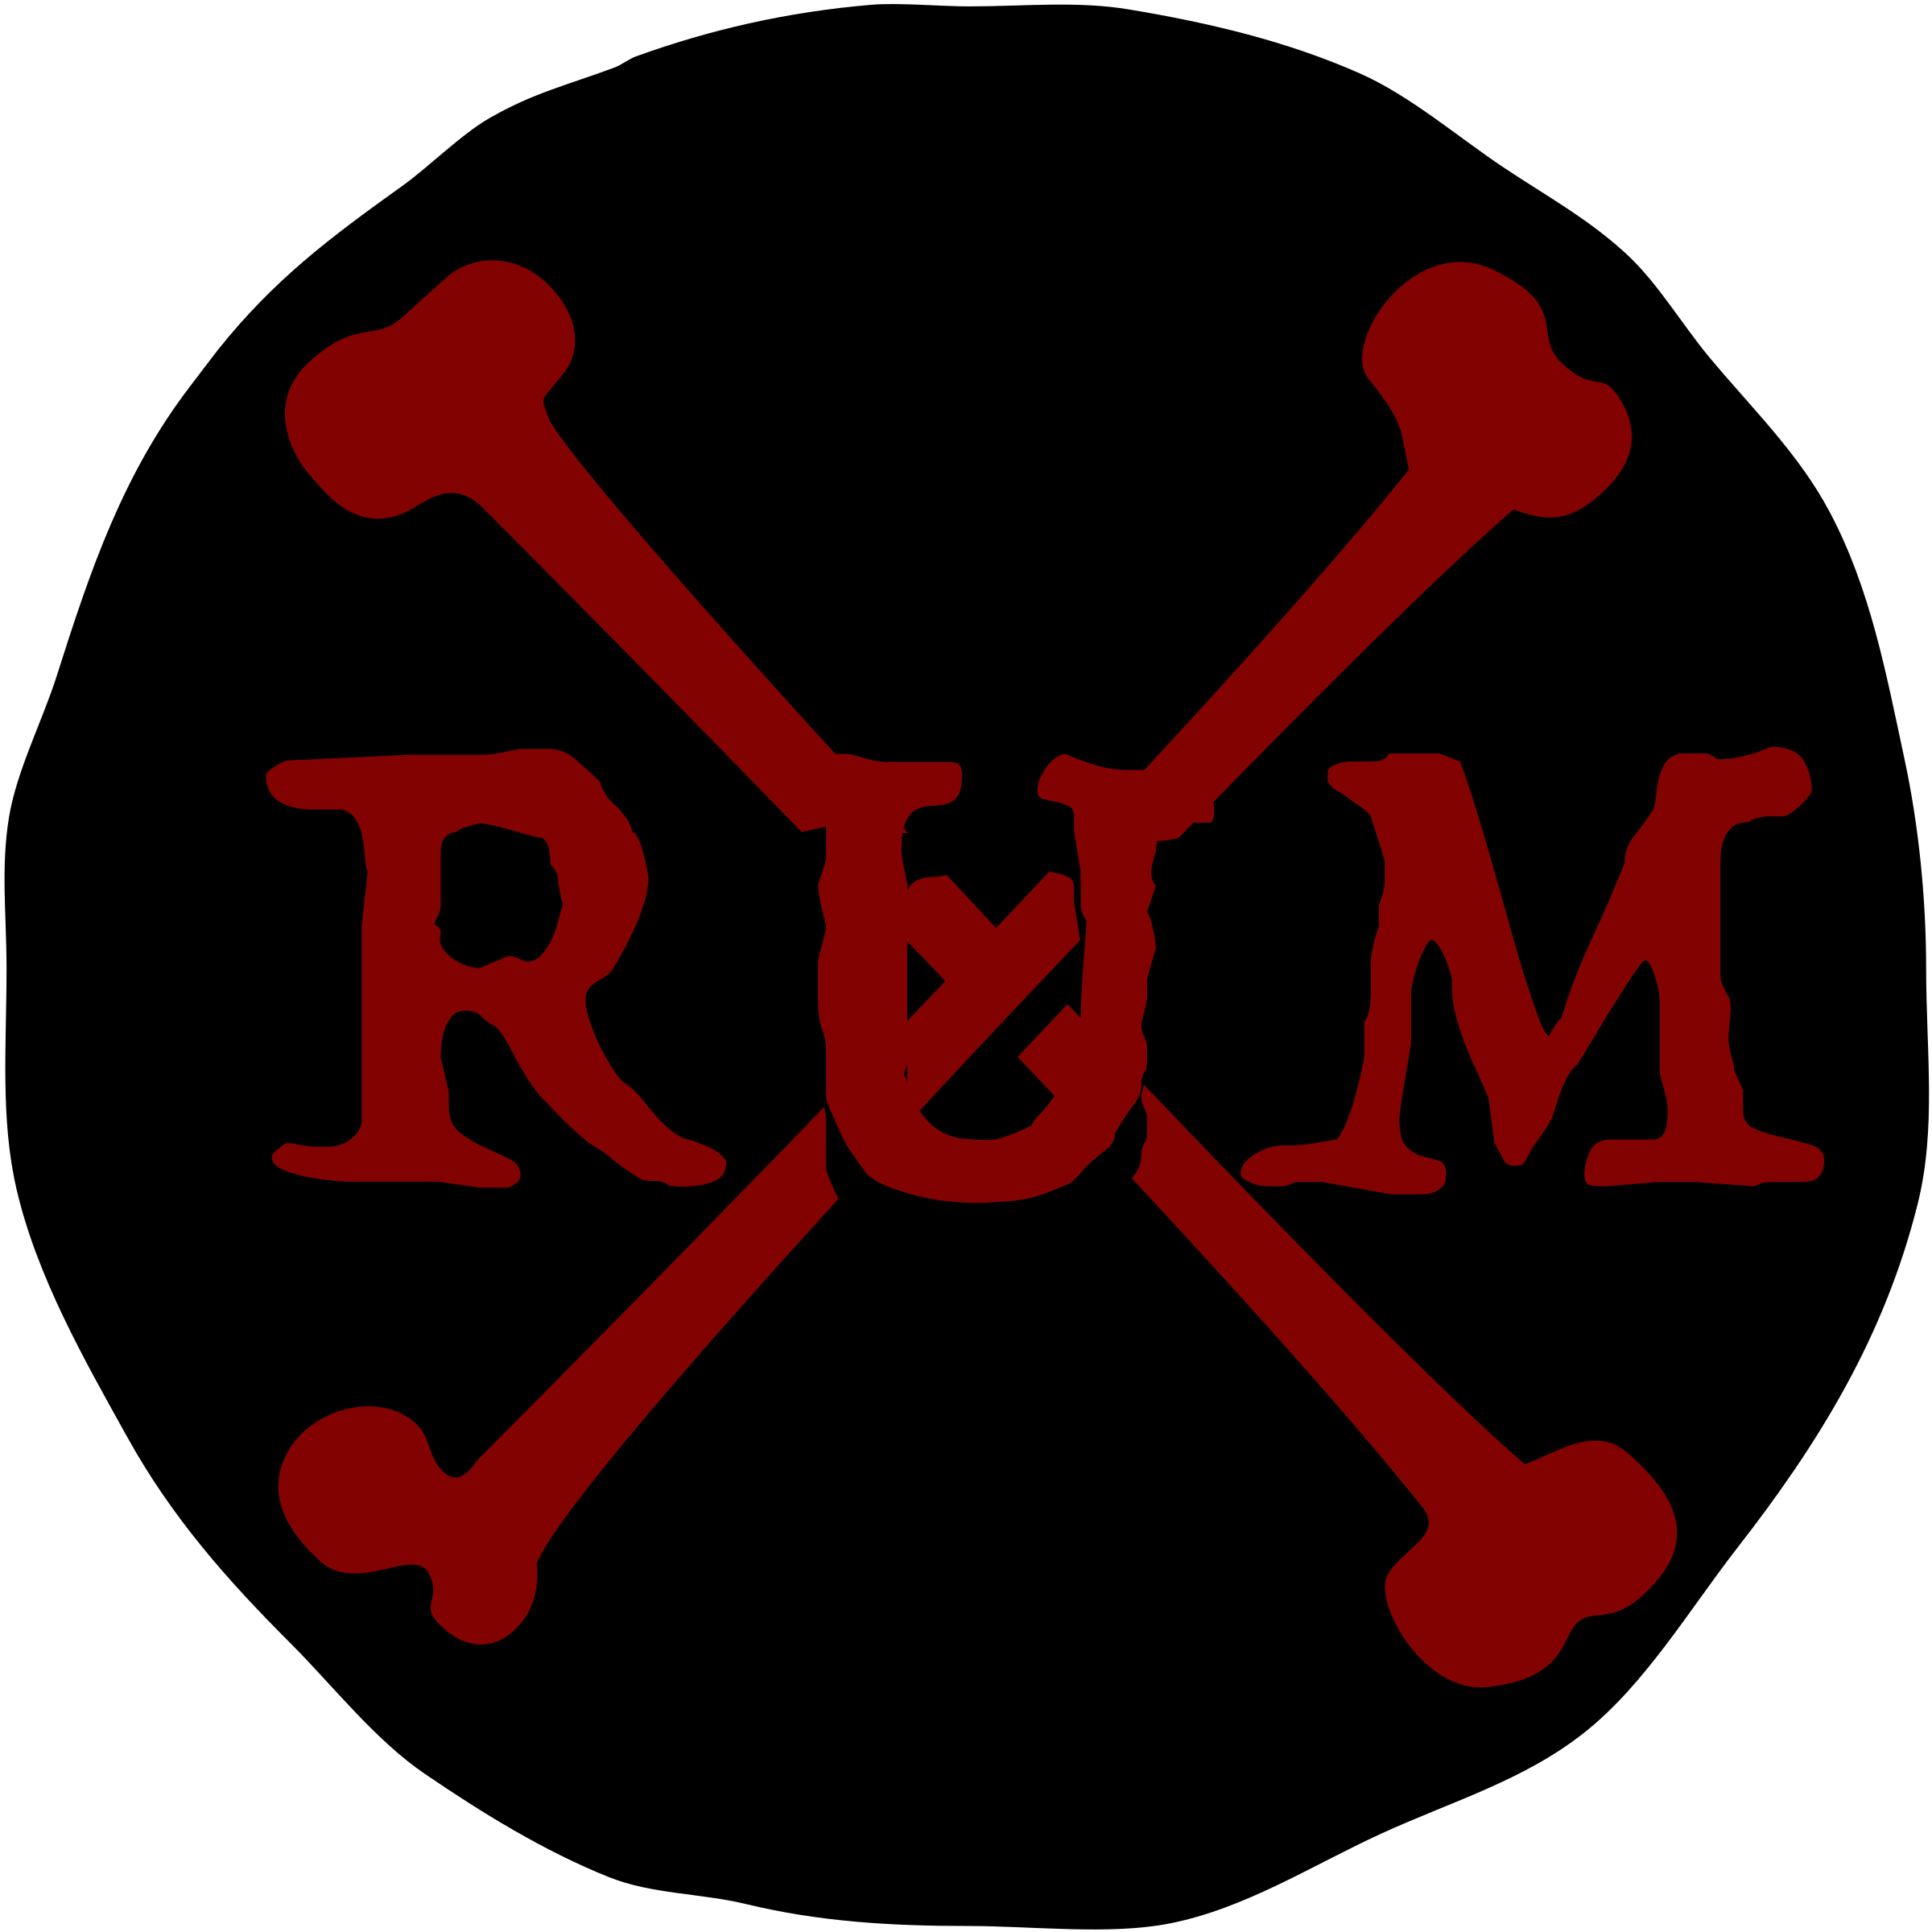 Rum Logo - Rum Logo PNG Transparent & SVG Vector - Freebie Supply